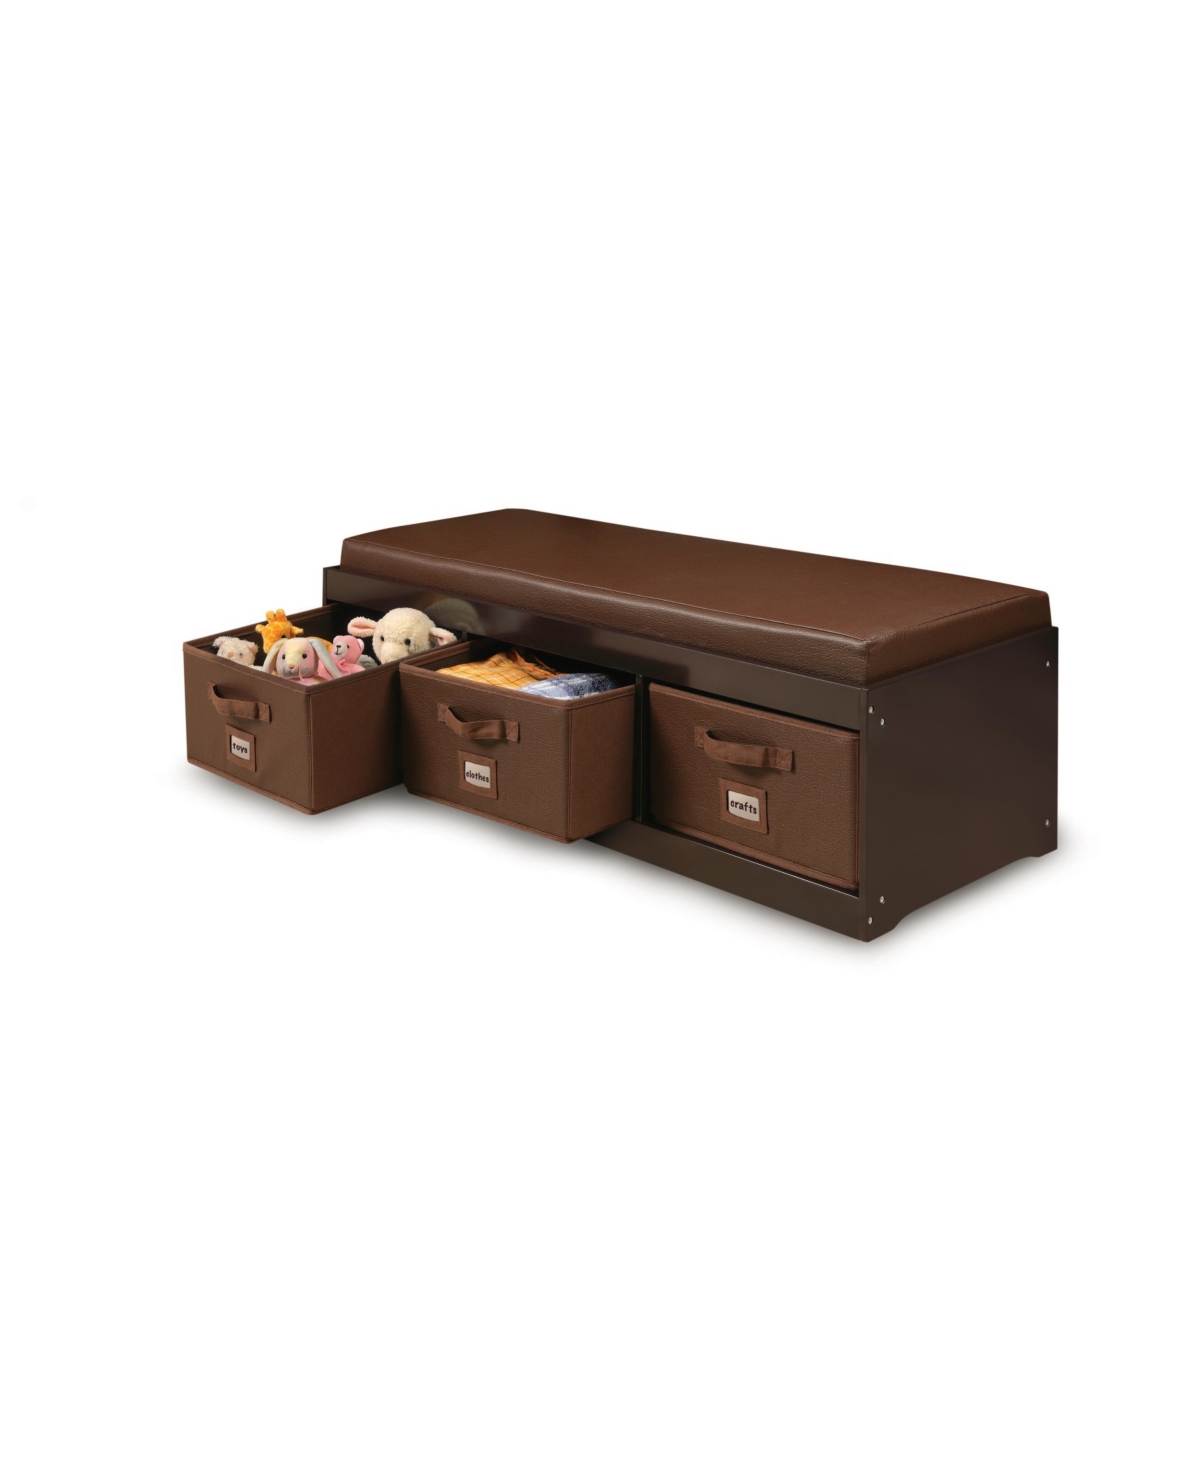 Kid's Storage Bench with Cushion and Three Bins - Espresso